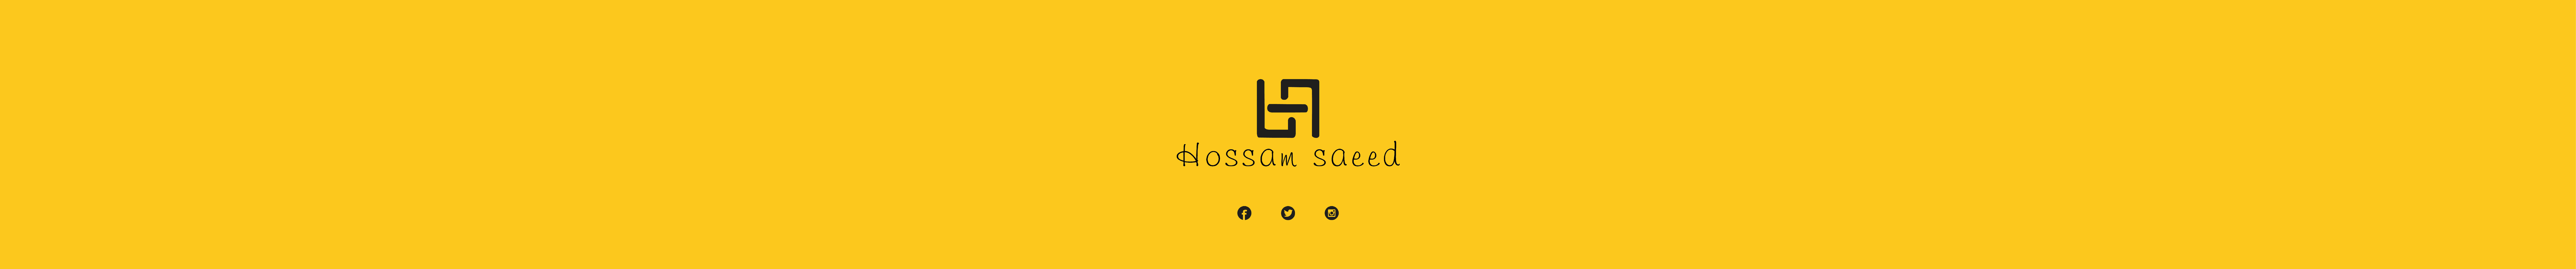 Hossam saeed's profile banner